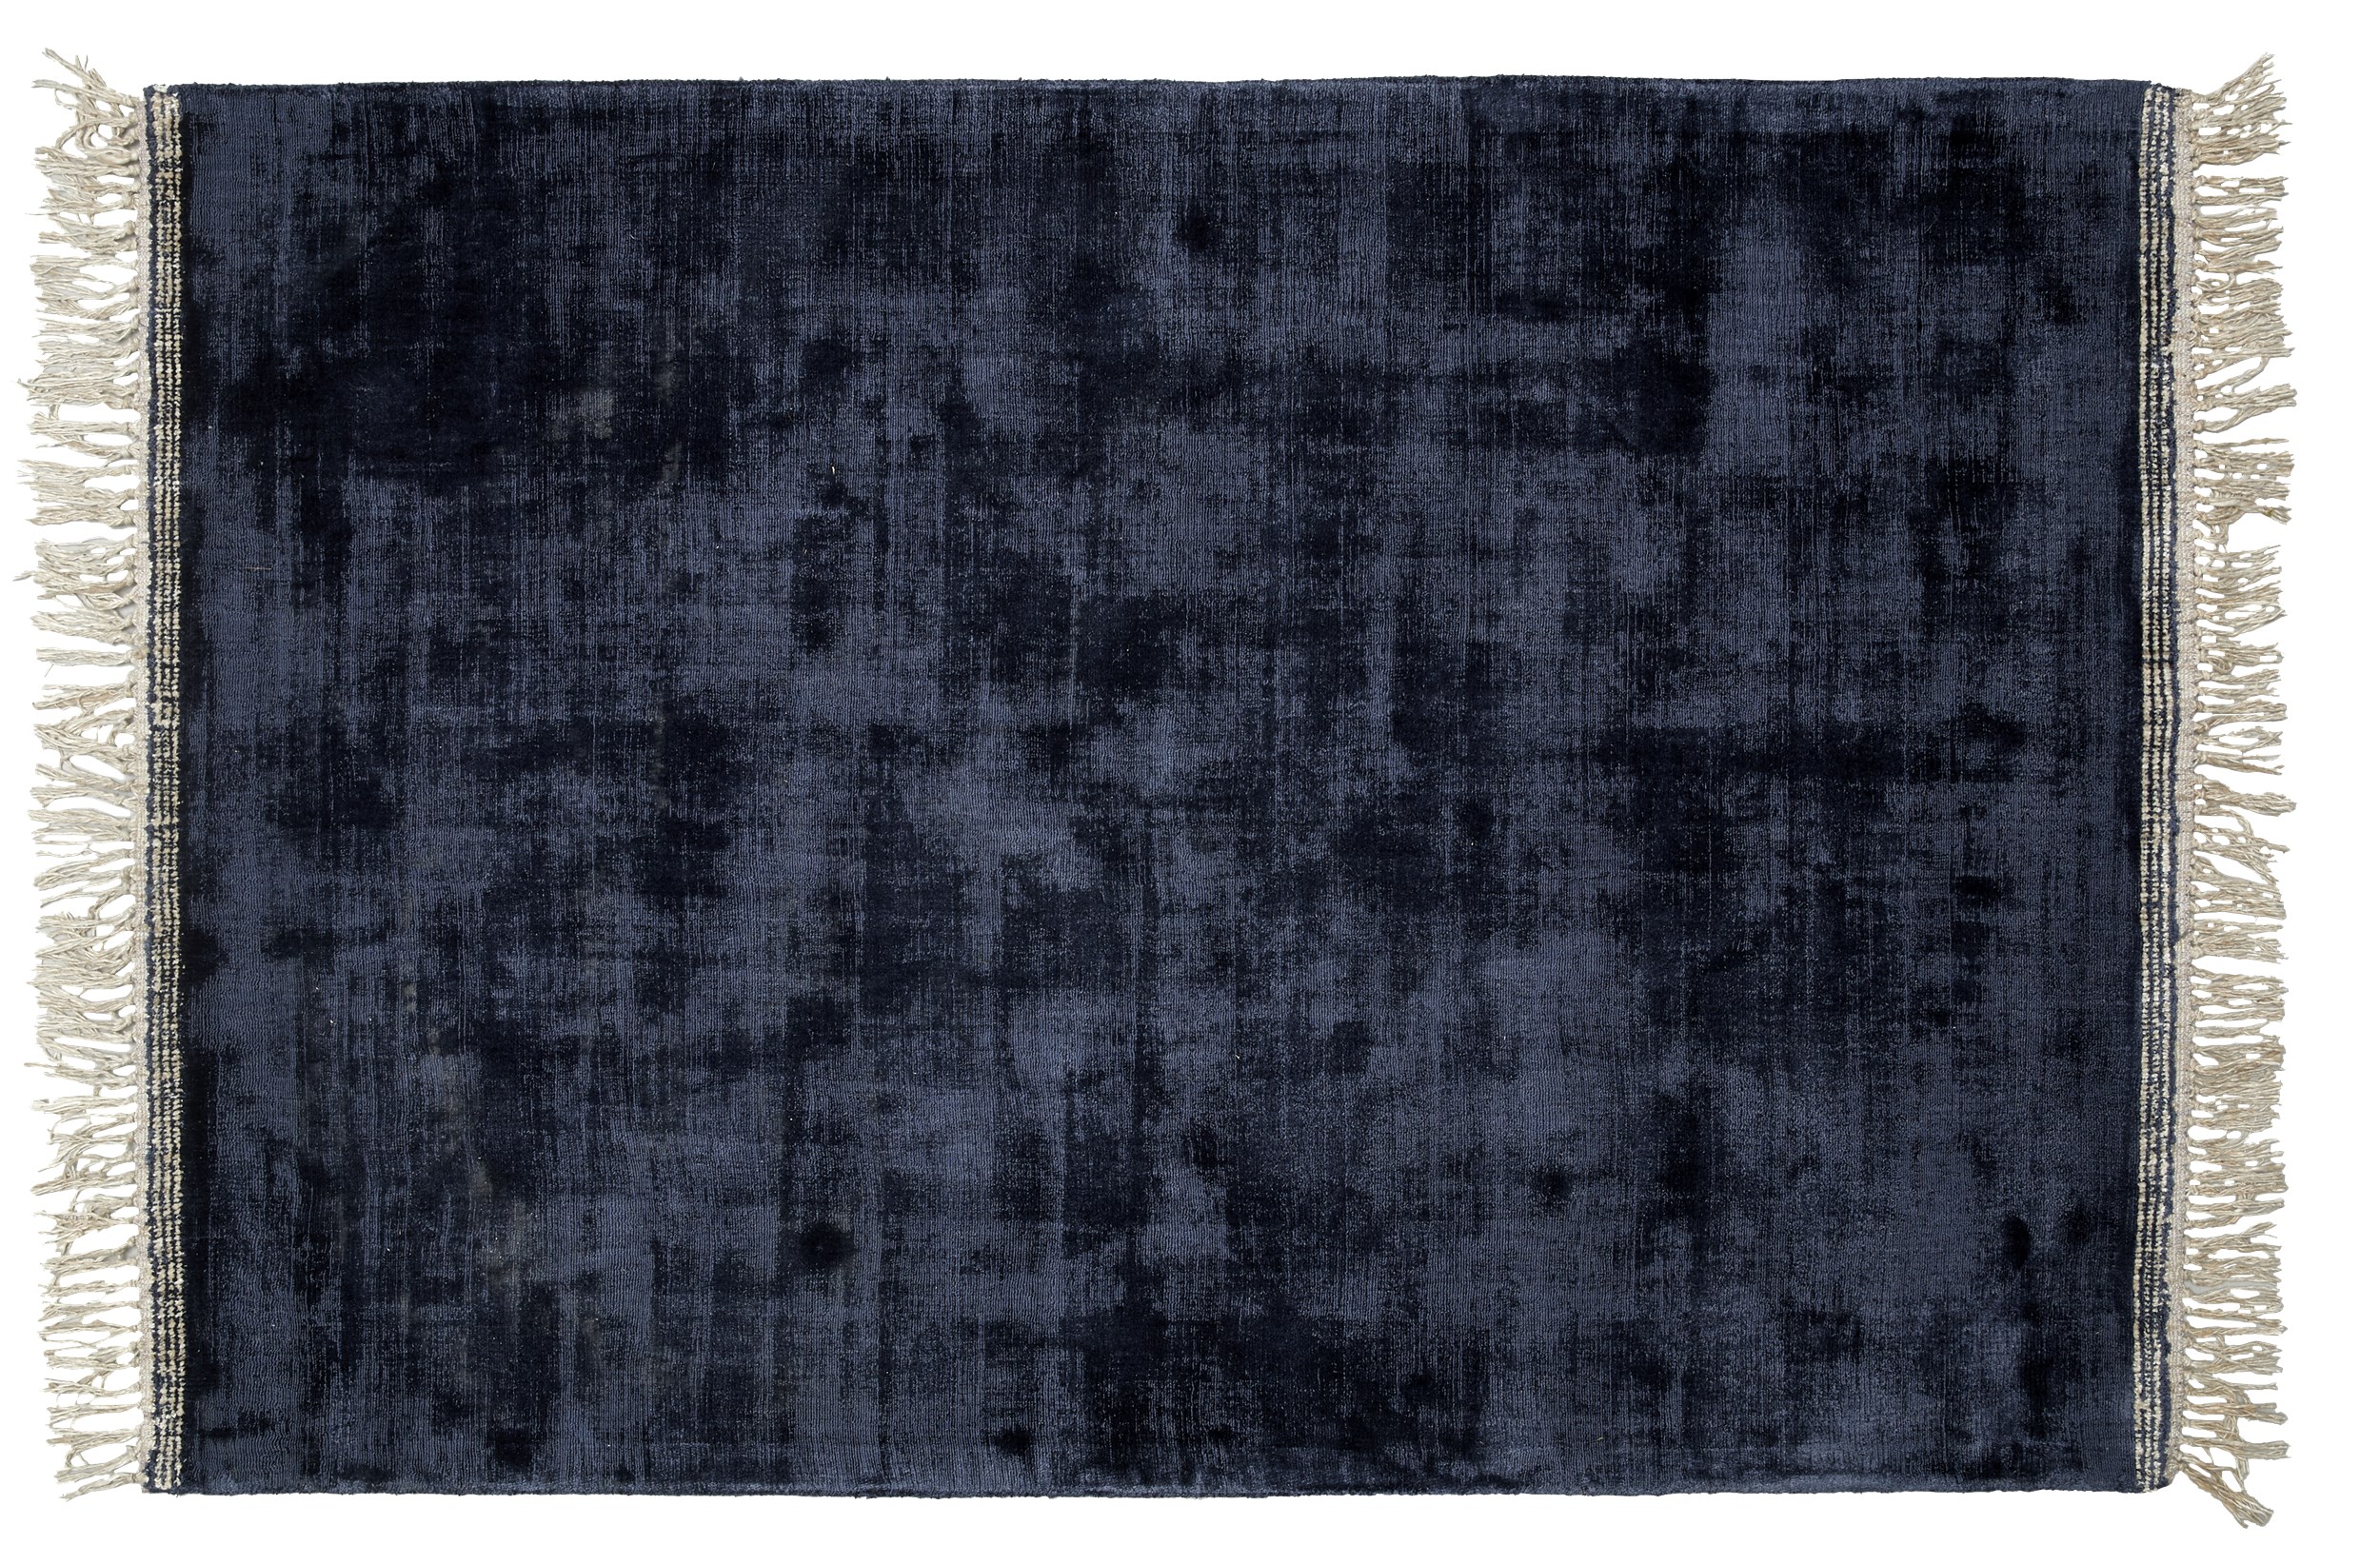 Topaz Tuftet tæppe 140 x 200 cm - Mørkeblå uld/viskose, offwhite kantstriber og offwhite frynser